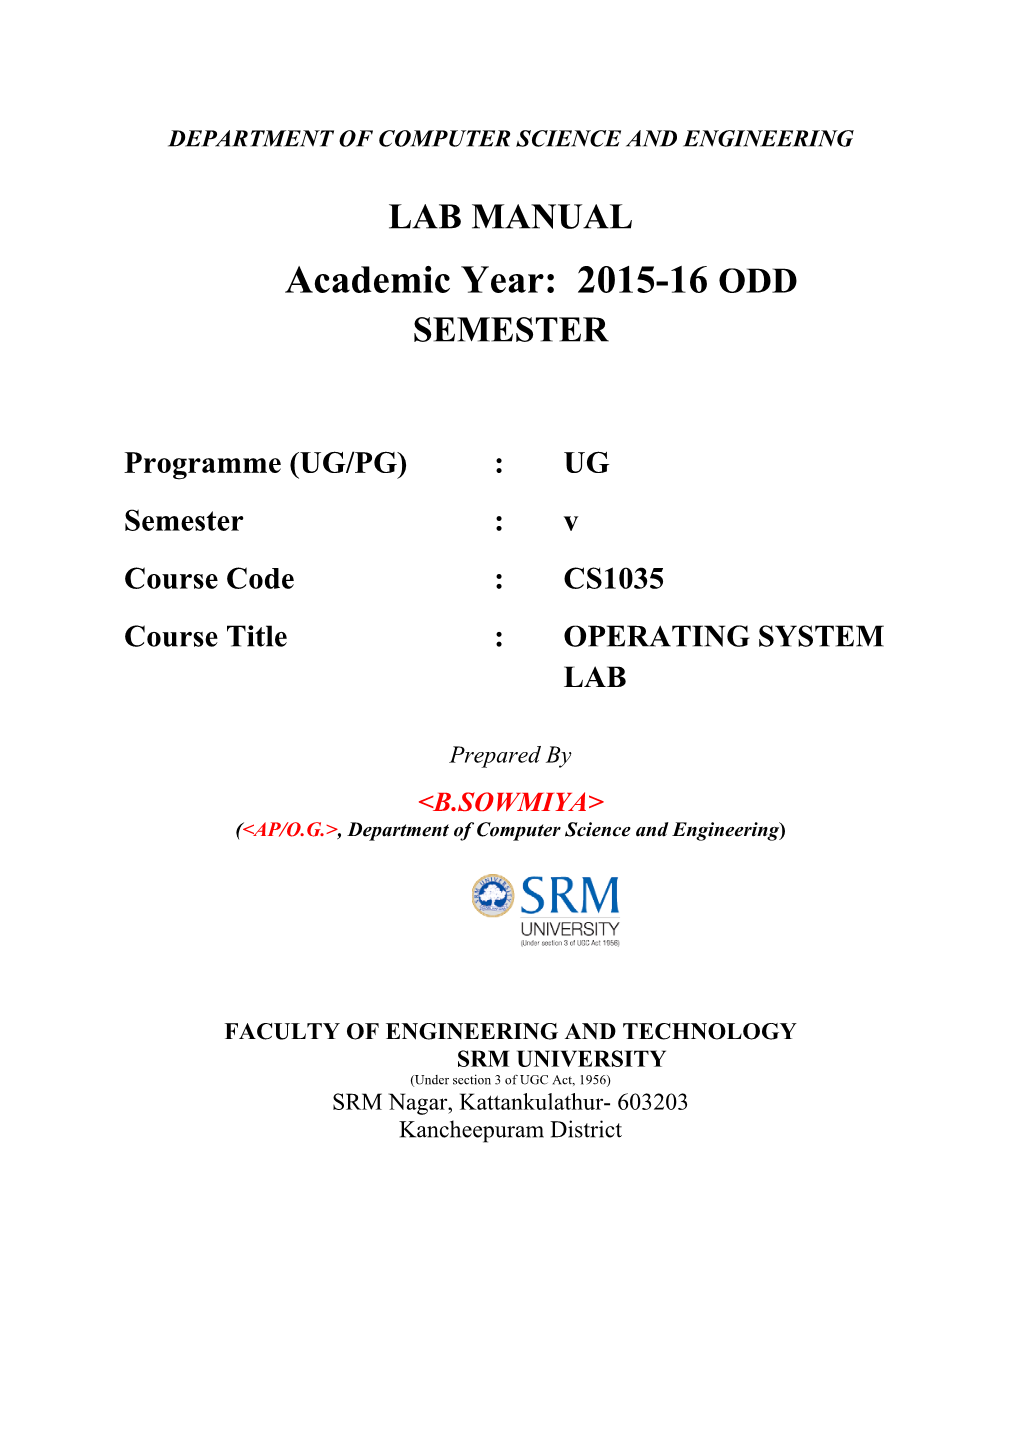 Academic Year: 2015-16 ODD SEMESTER